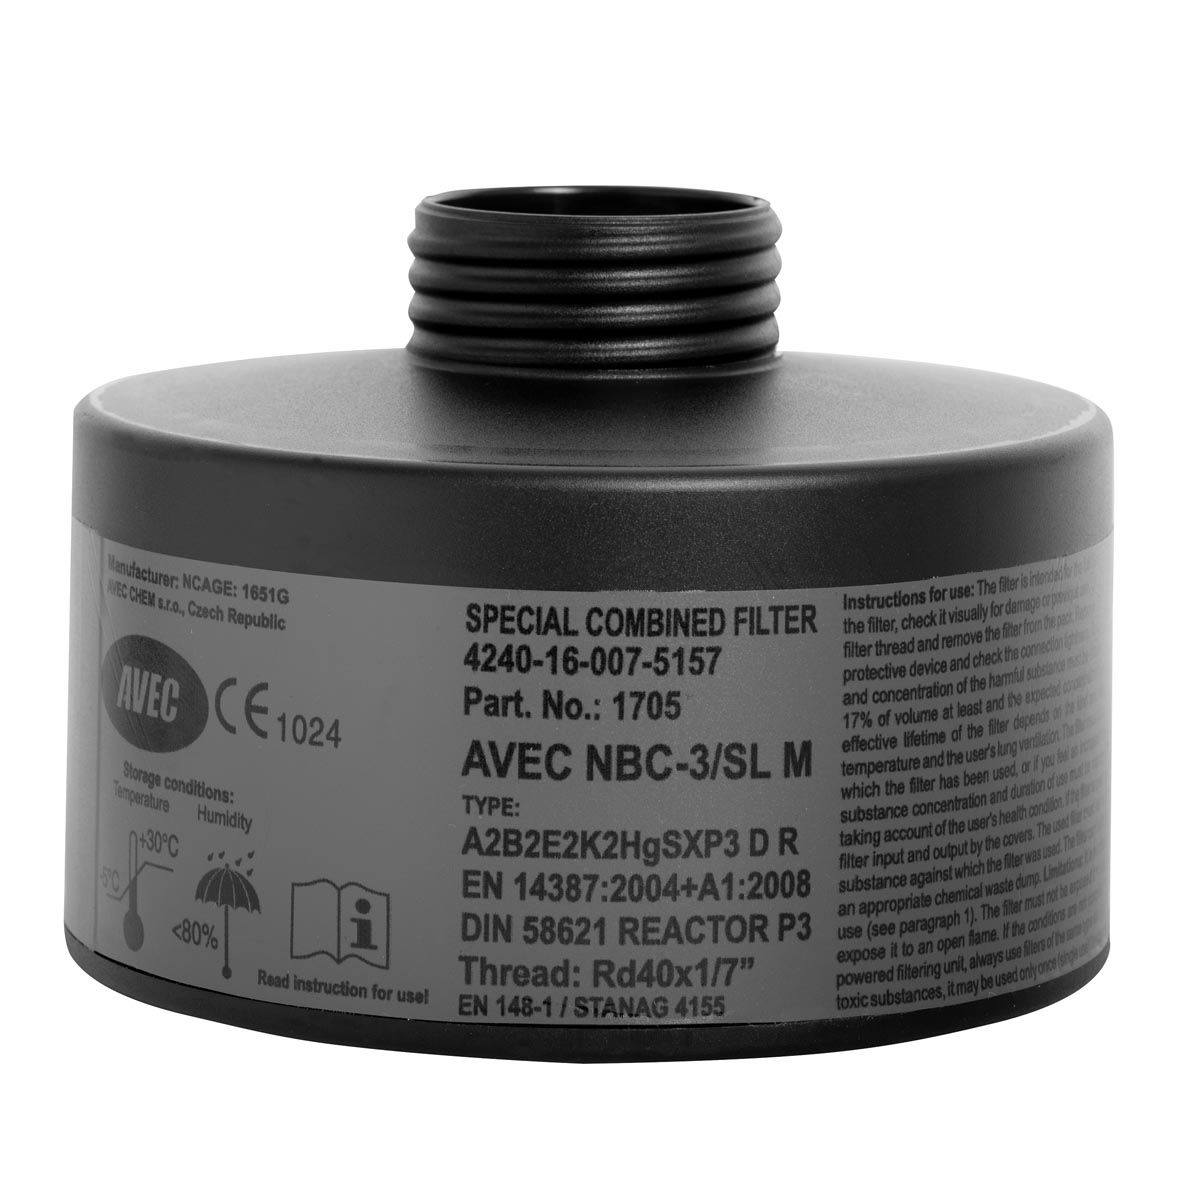 ACE Calypso CM-6 Universal-Atemmaske - mit AVEC NBC-3 SL M - REACTOR-Filter - gegen nukleare/biologische/chemische Stoffe (u.a. für radioaktives Jod)